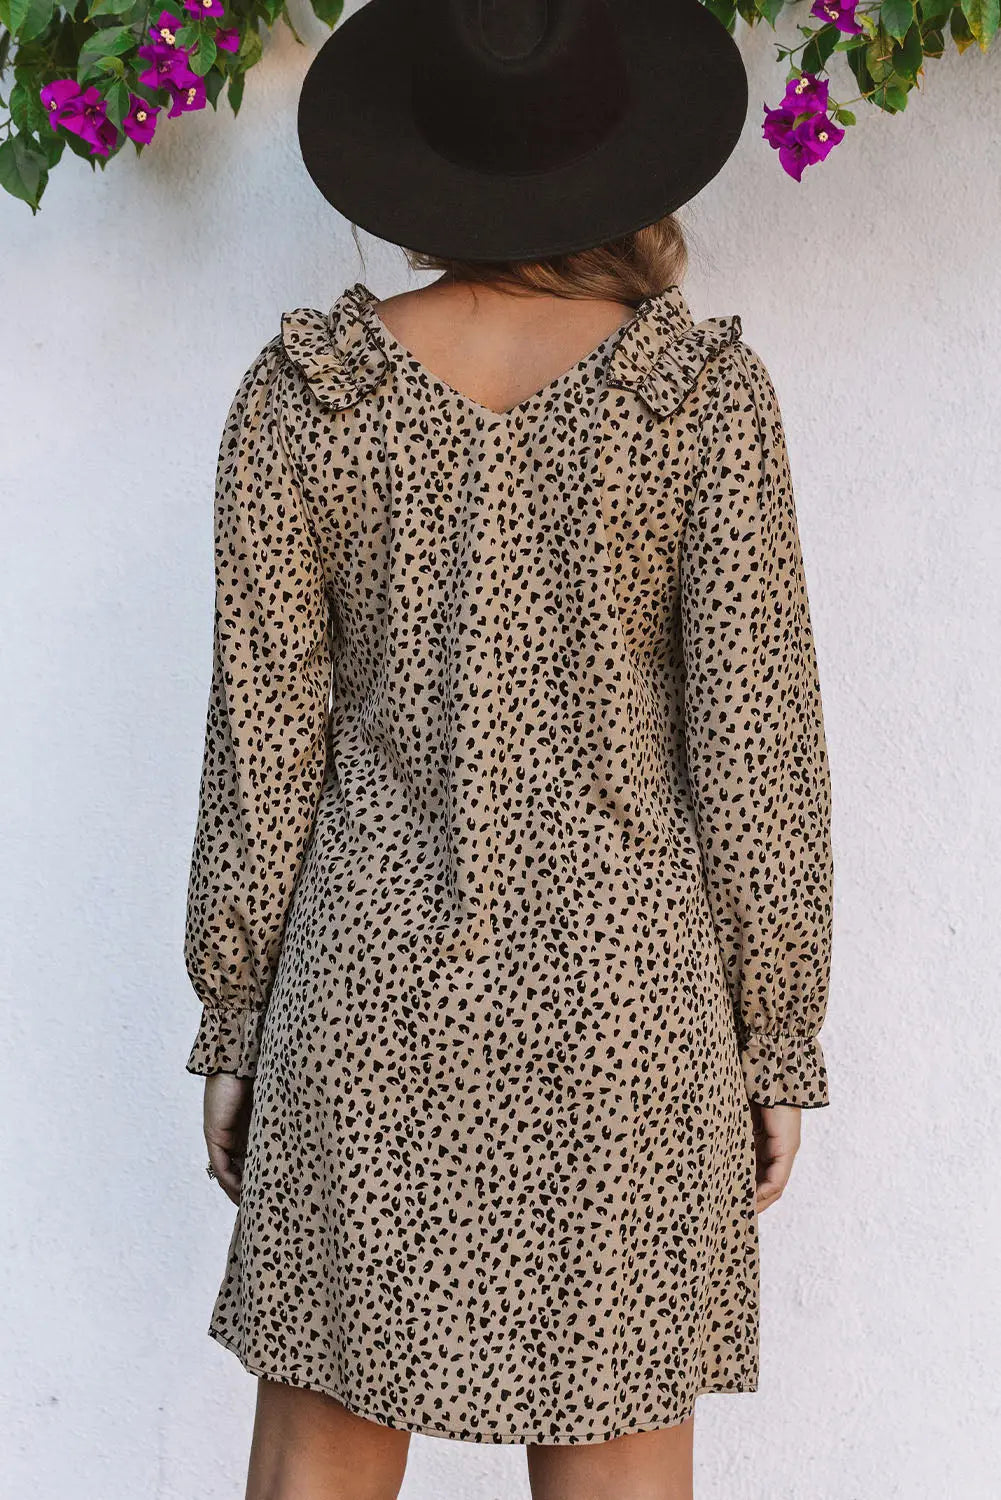 Khaki leopard frill trim v neck dress - mini dresses